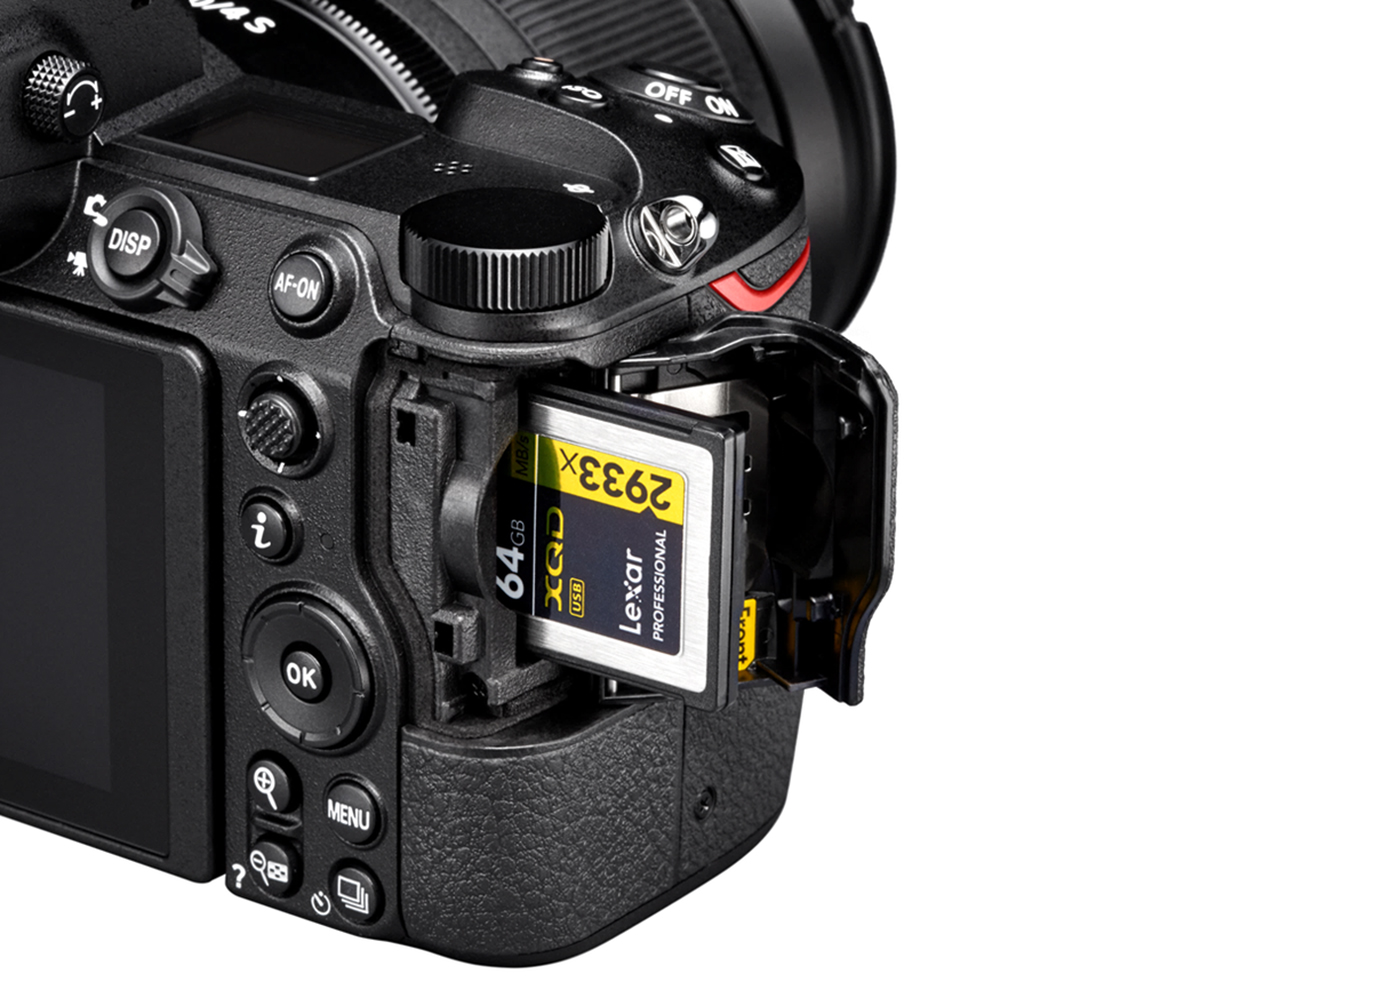 Nikon-Z6-mirrorless-camera3.jpg